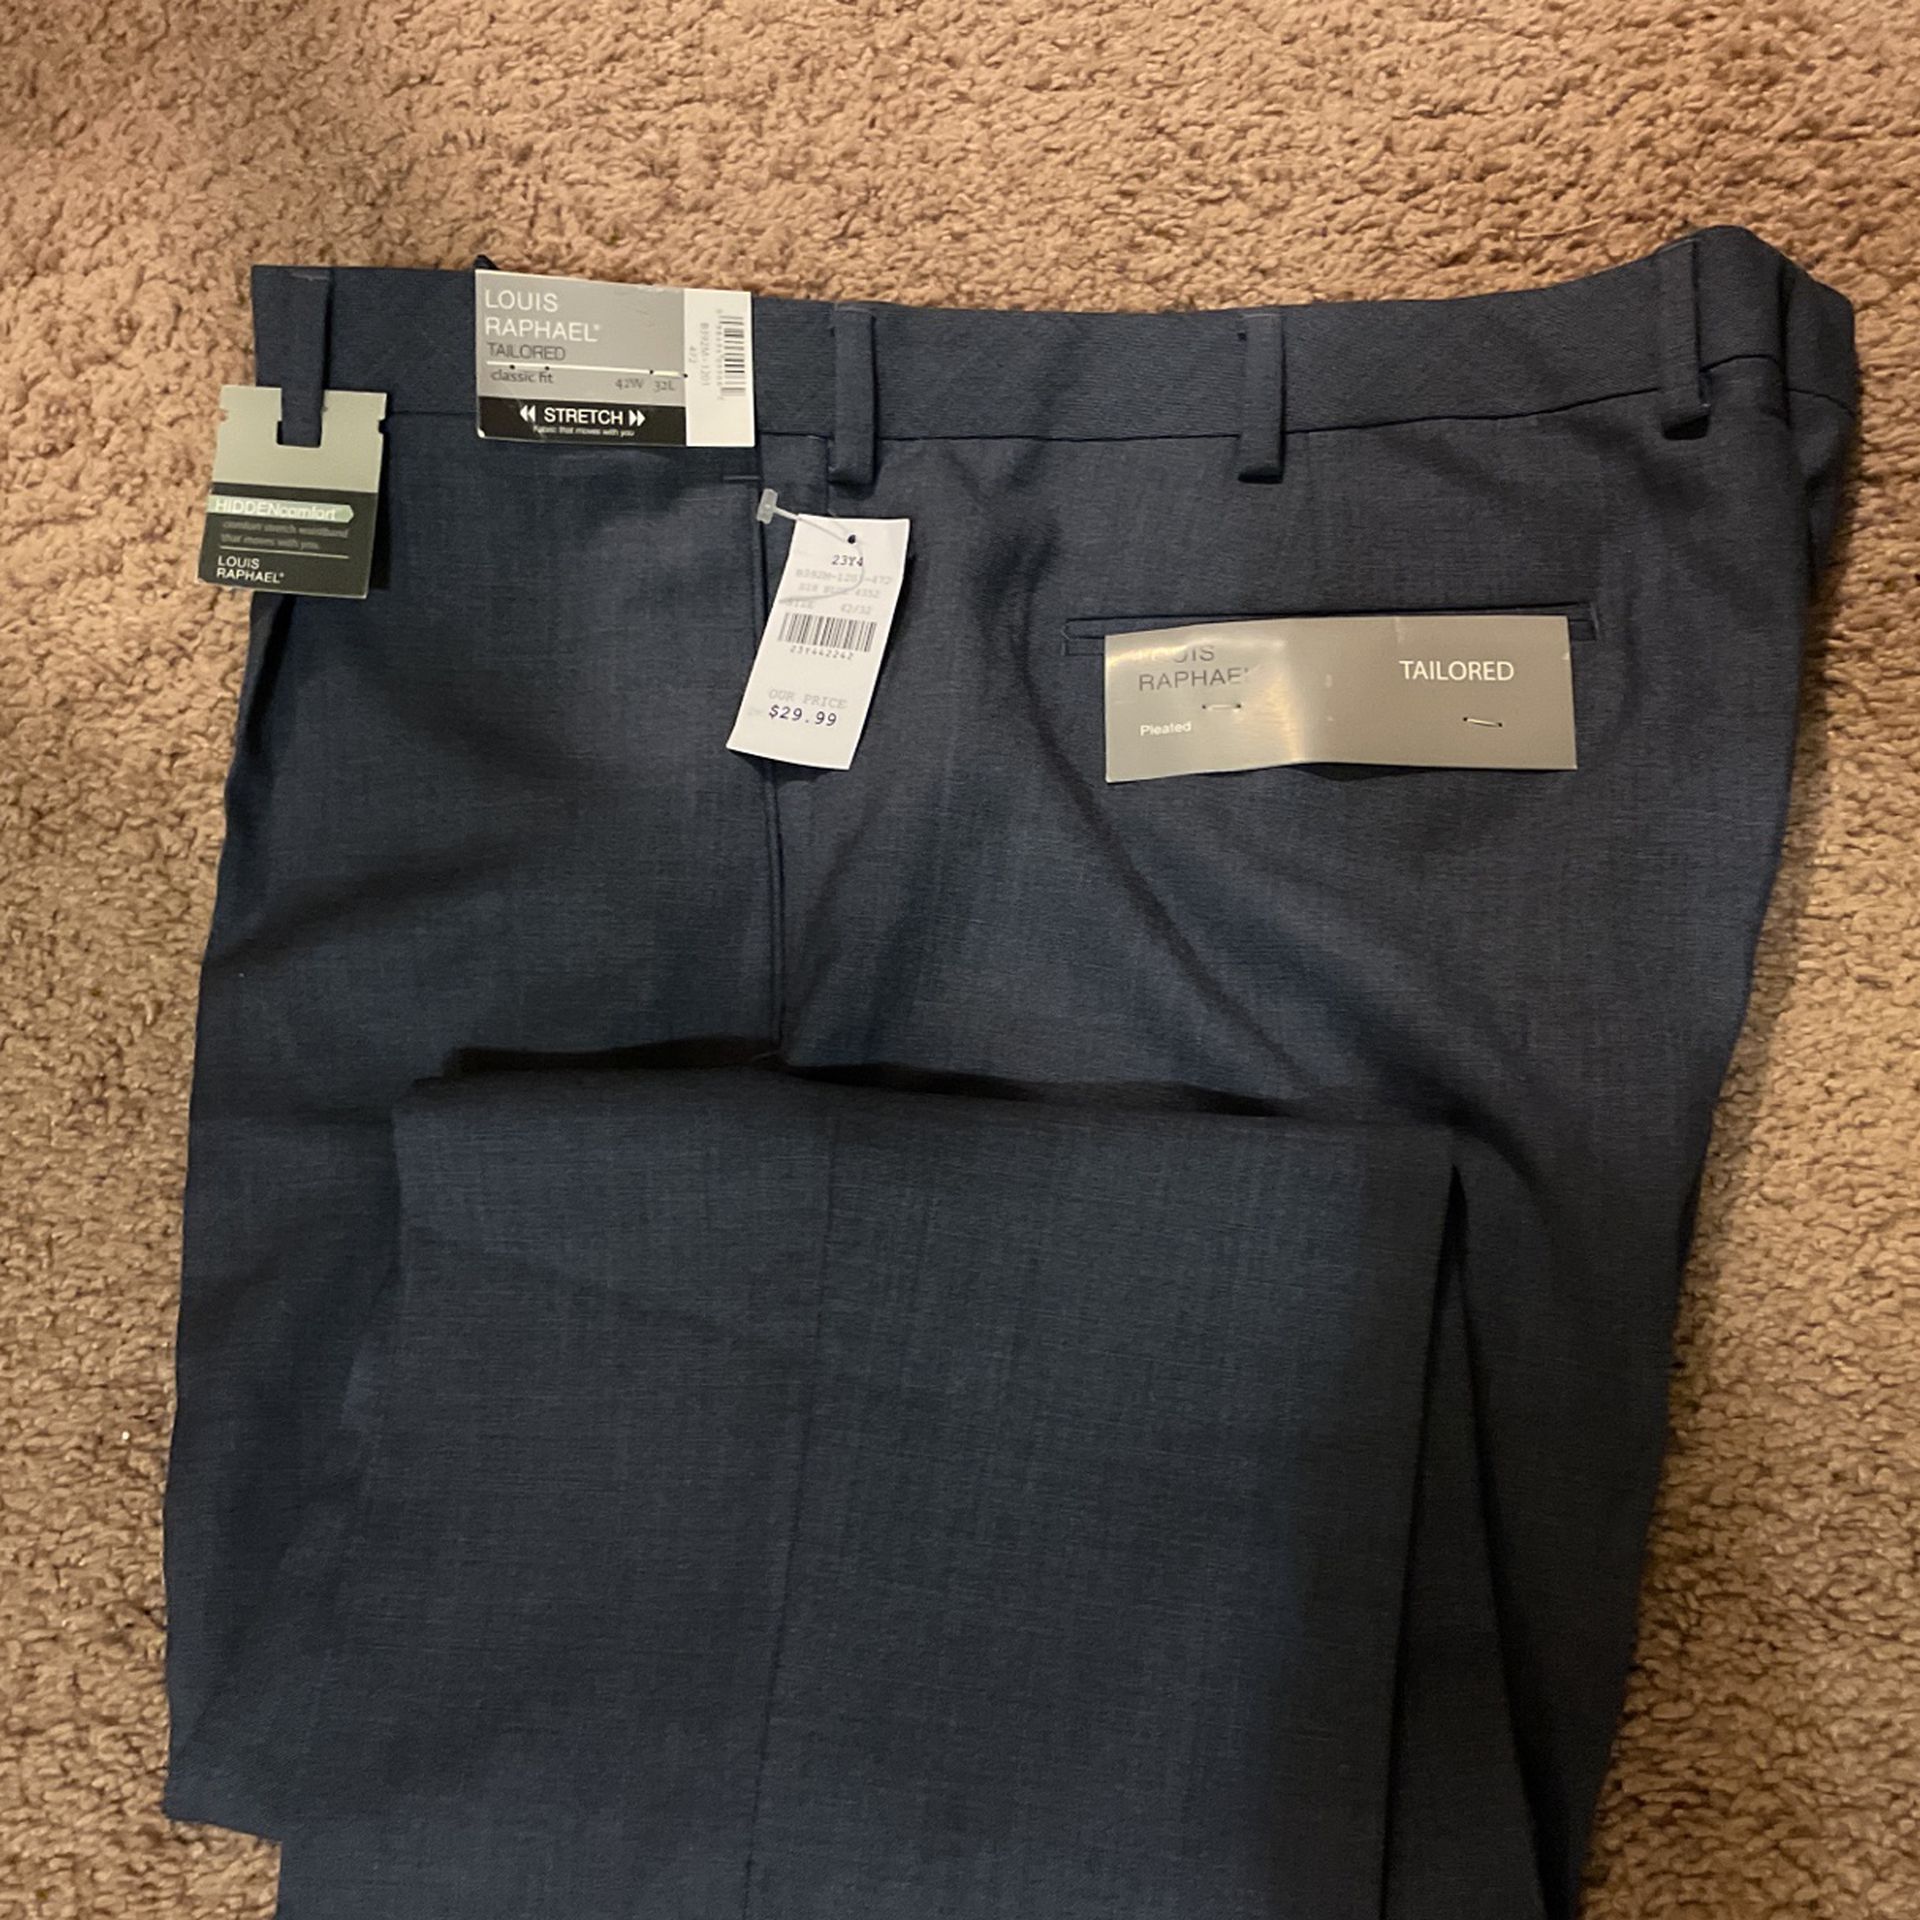 New Men Dress Pants Grayish Blue With Tag $10